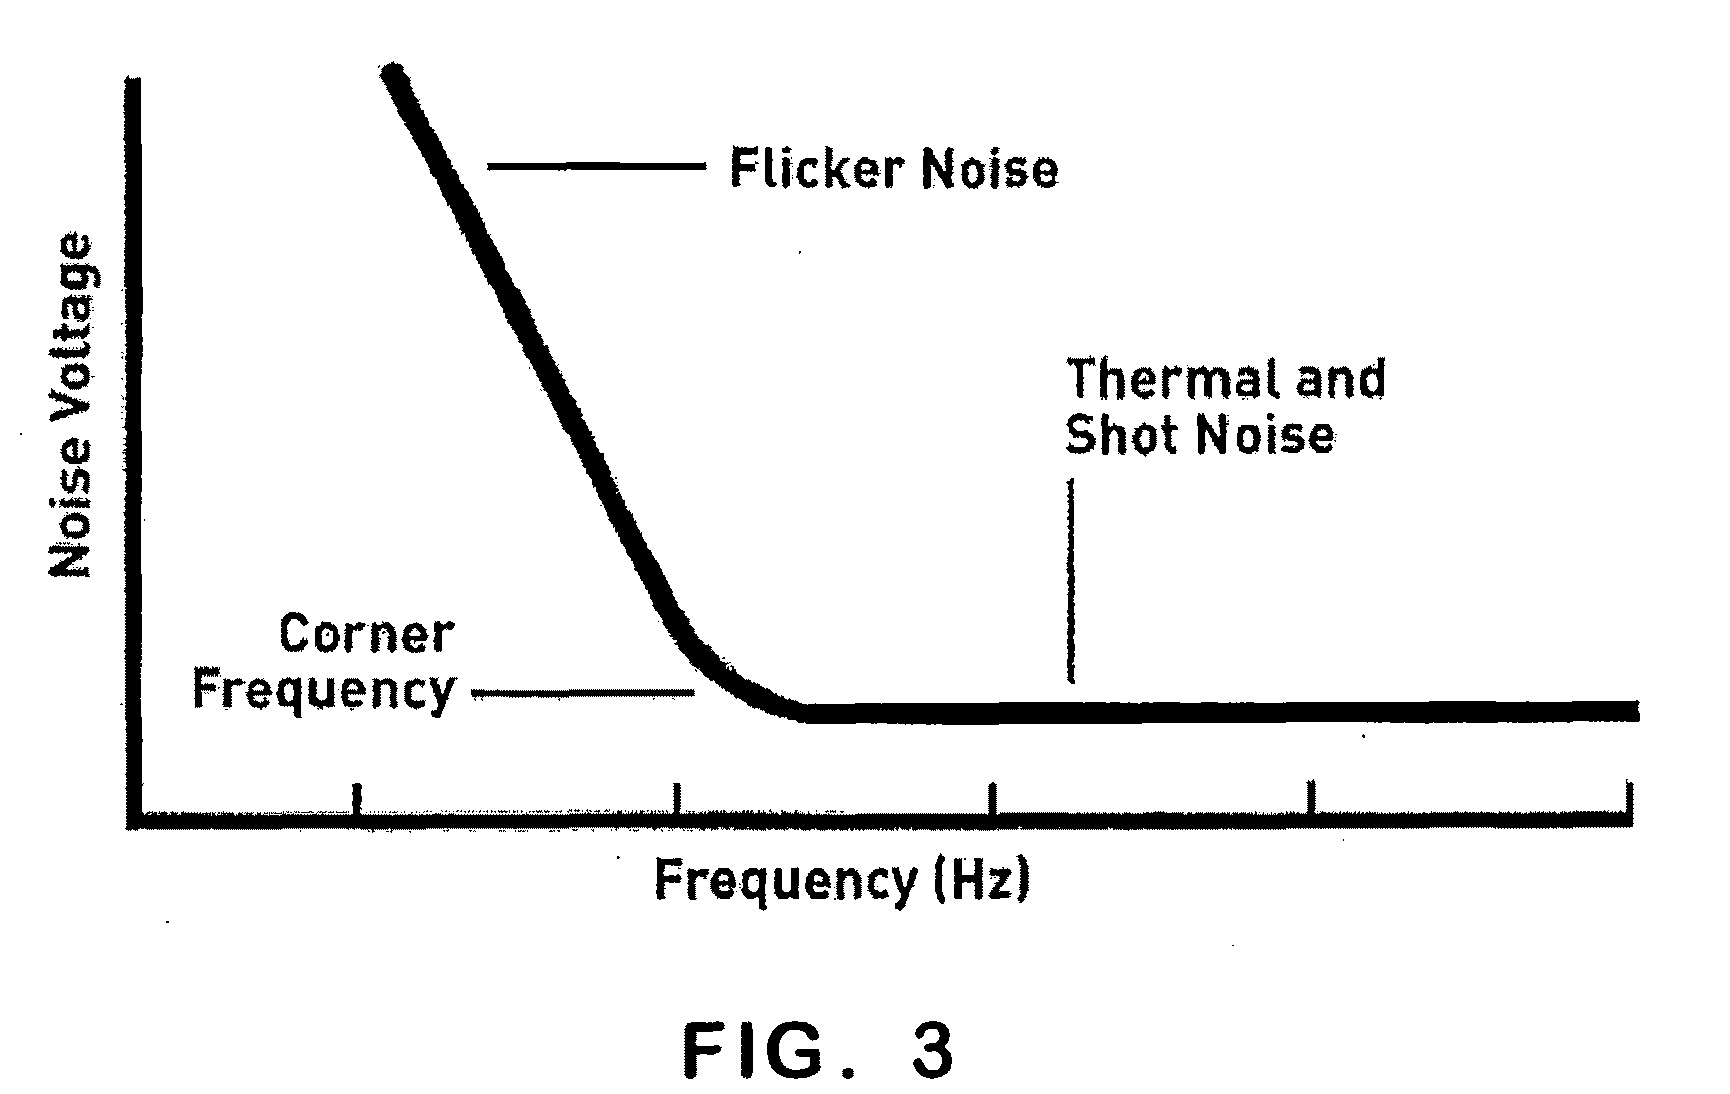 Test system for flicker noise